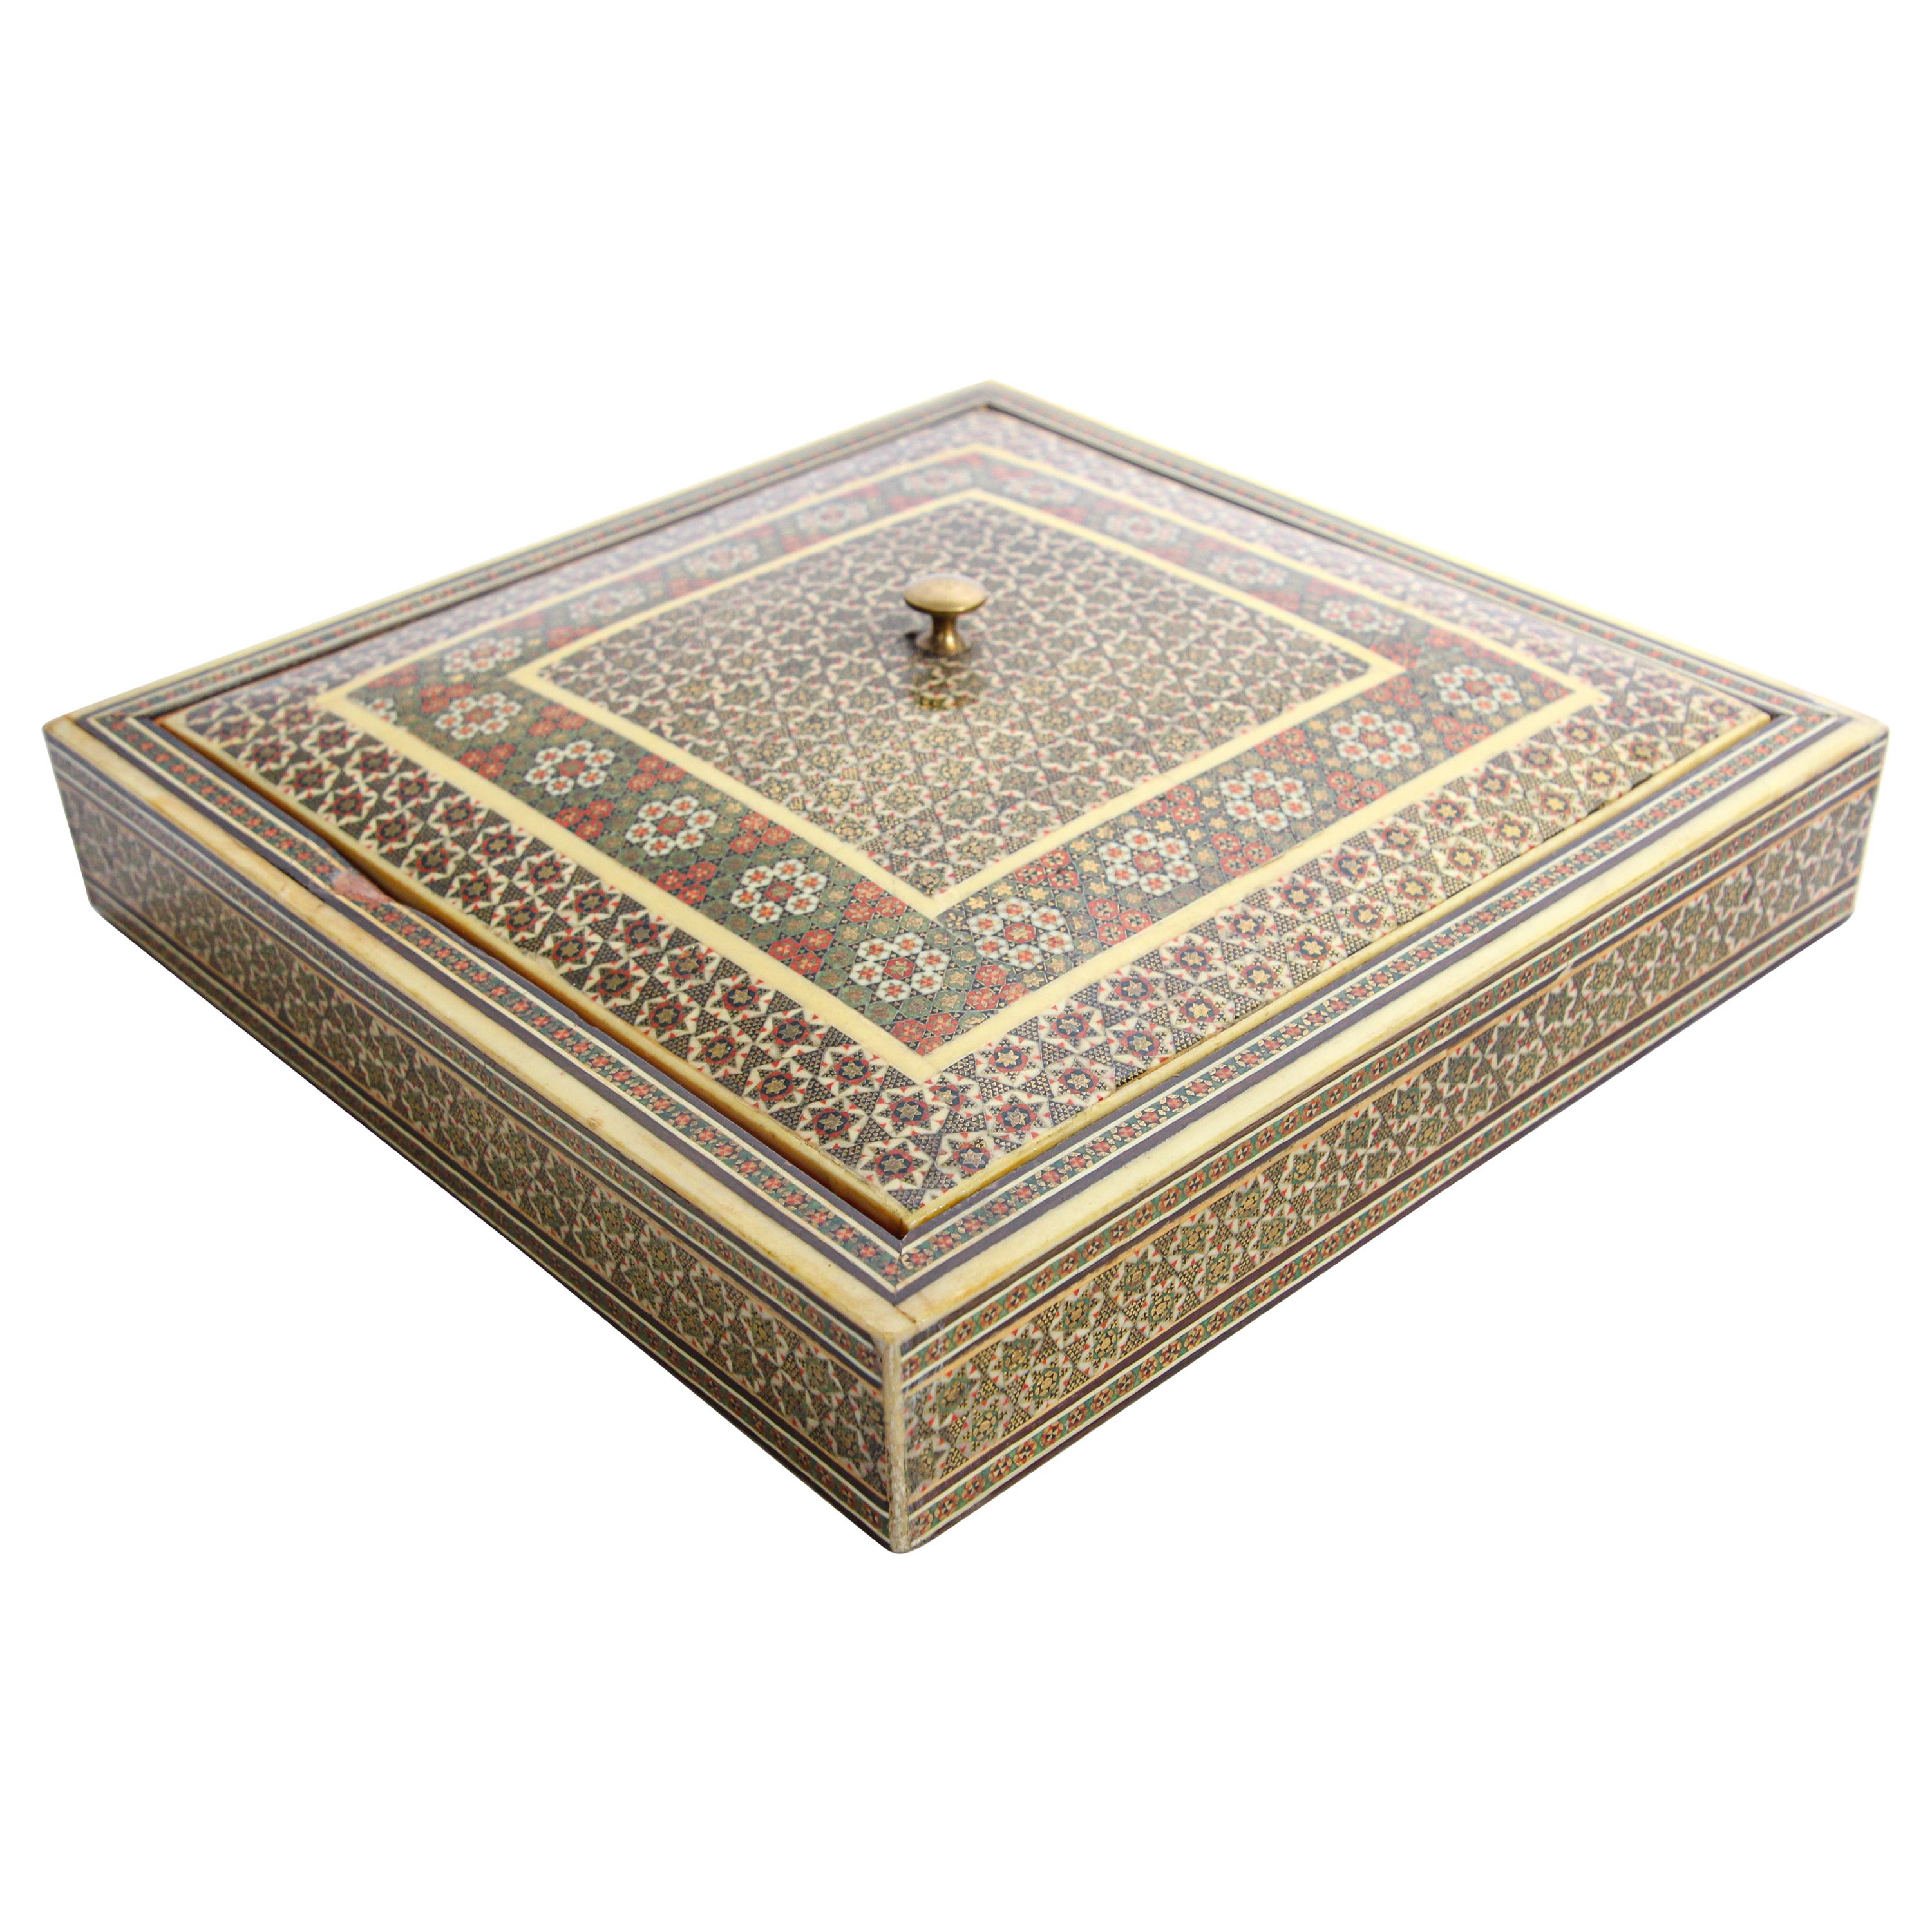 Anglo Indian Micro Sadeli Mosaic Inlaid Jewelry Box